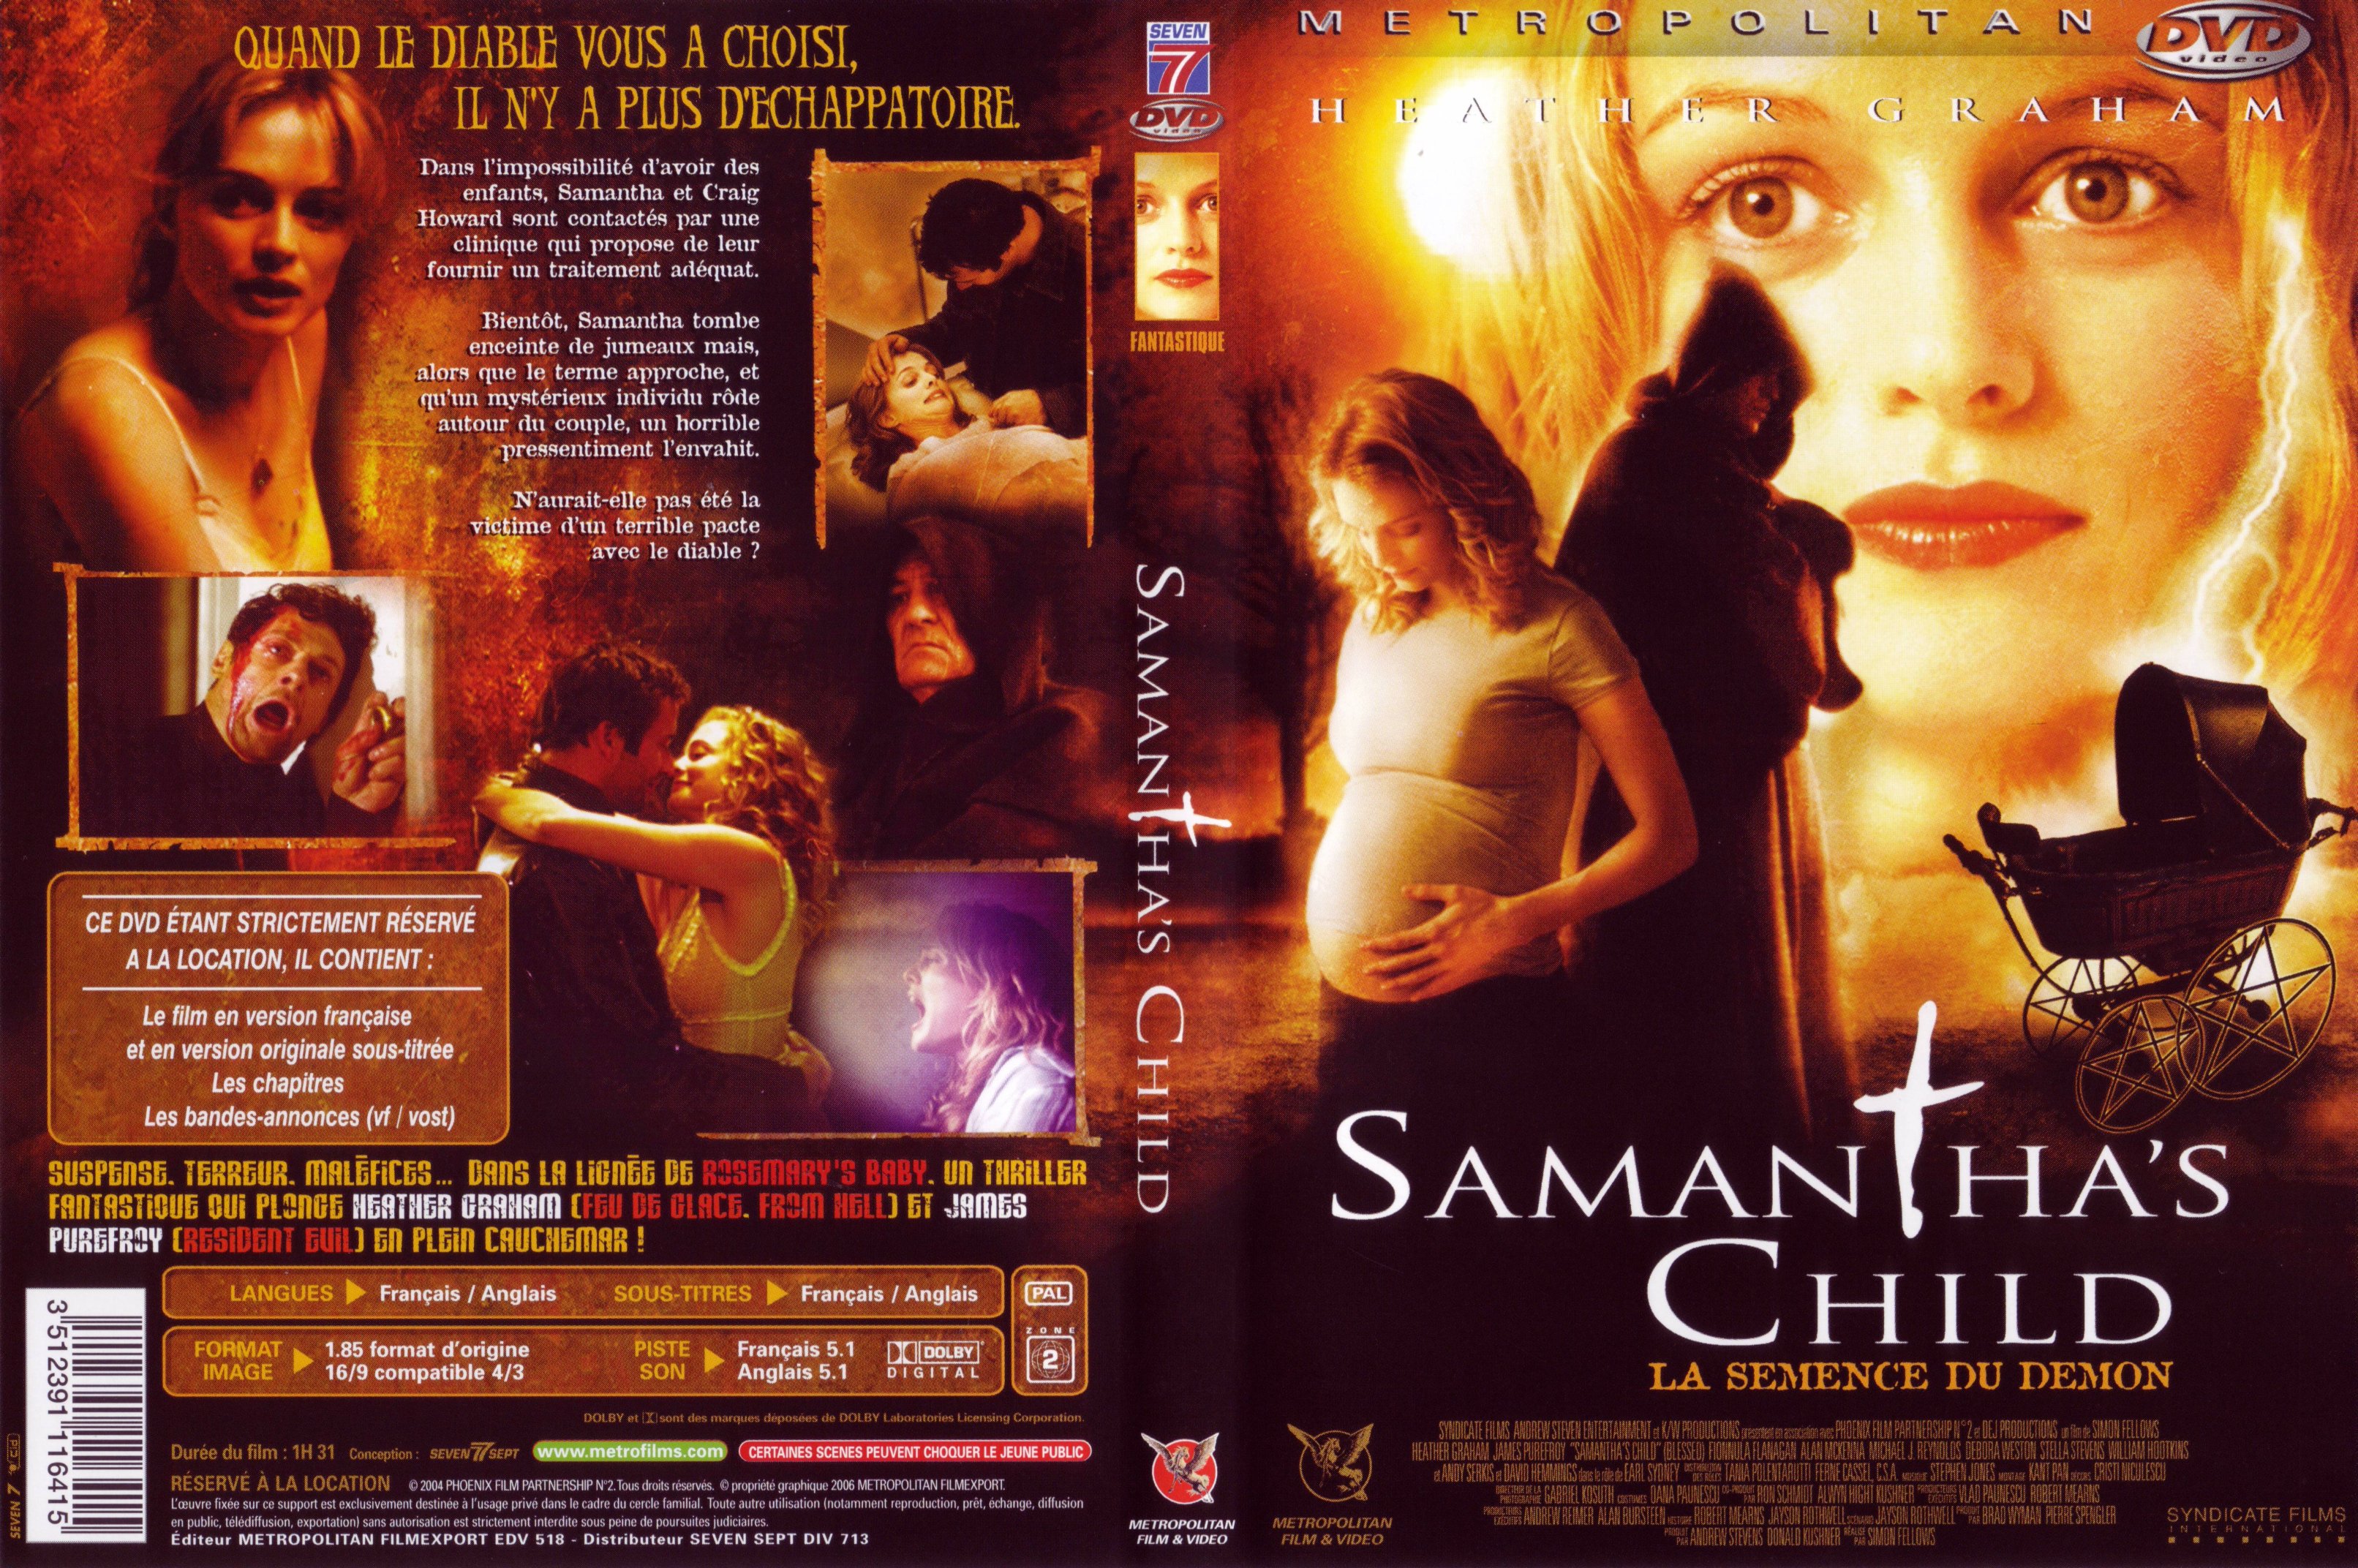 Jaquette DVD Samantha